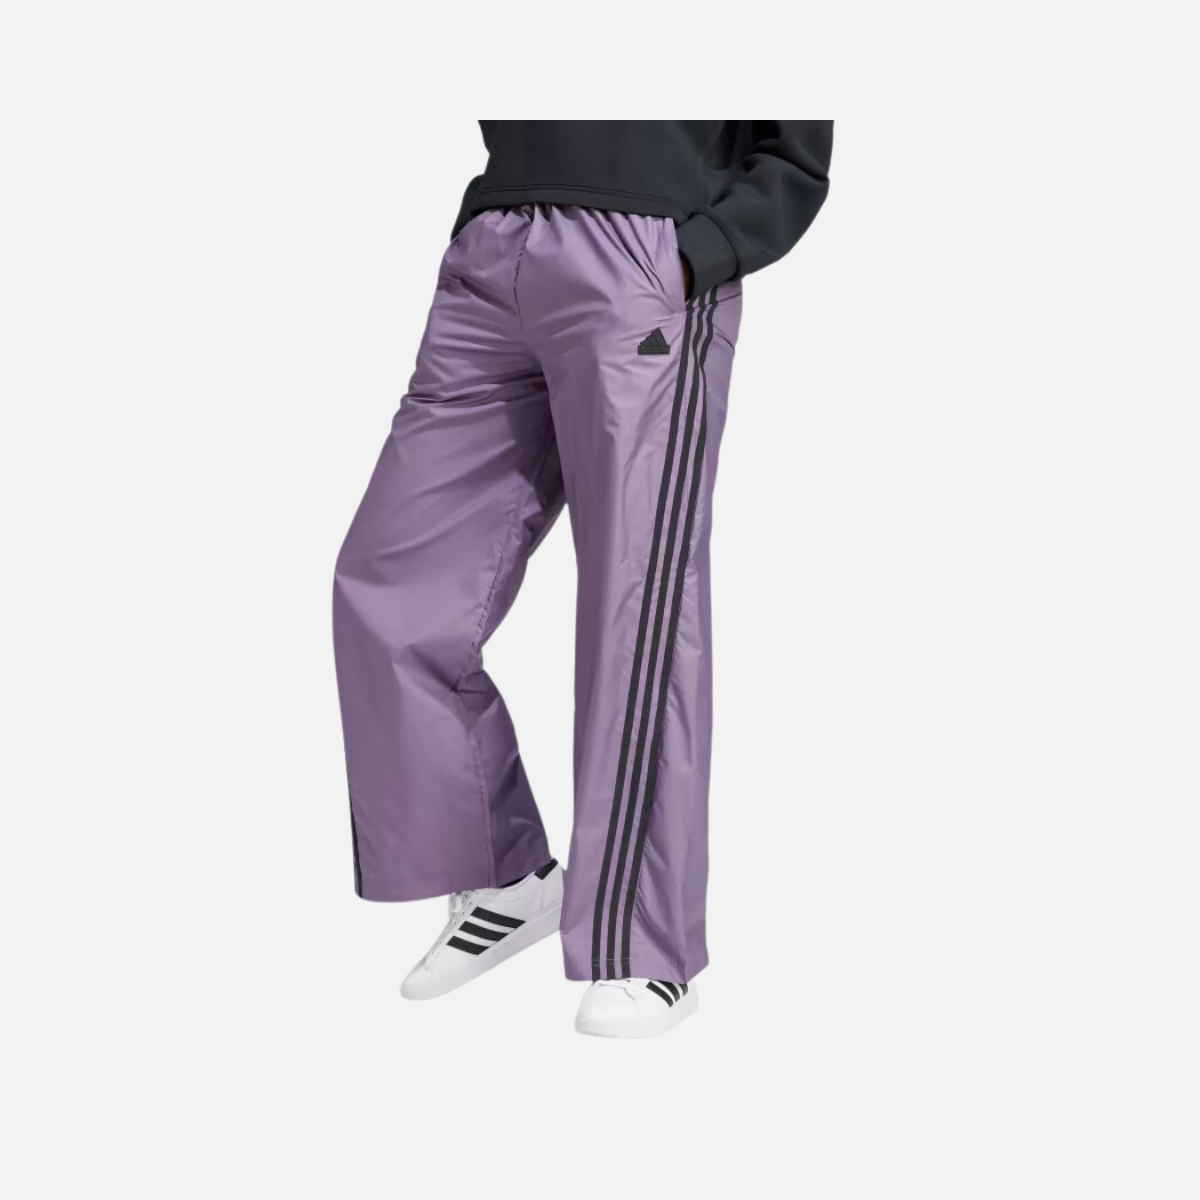 Adidas Future Icons 3 Stripes Woven Women's Pant -Shadow Violet